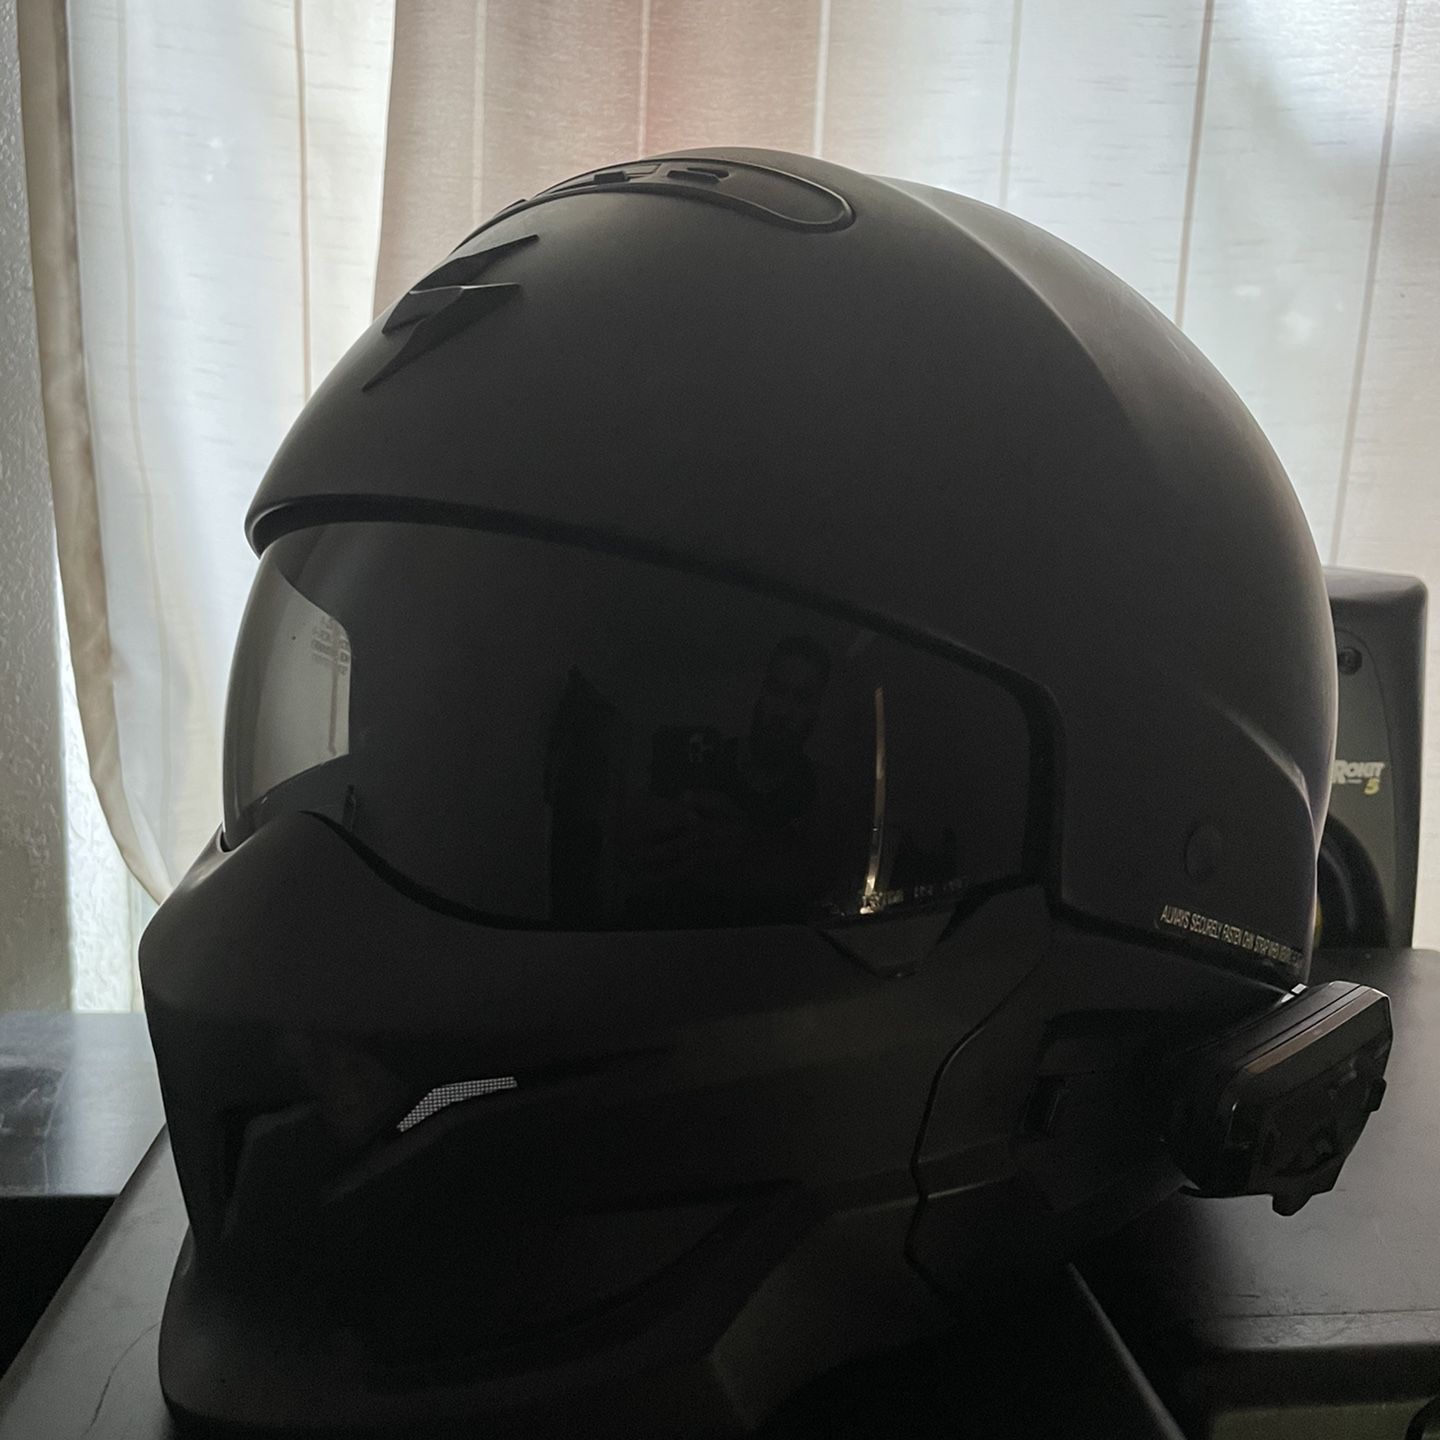 Scorpion Covert Helmet And Cardo Freecom 4 Headset With JBL Sound